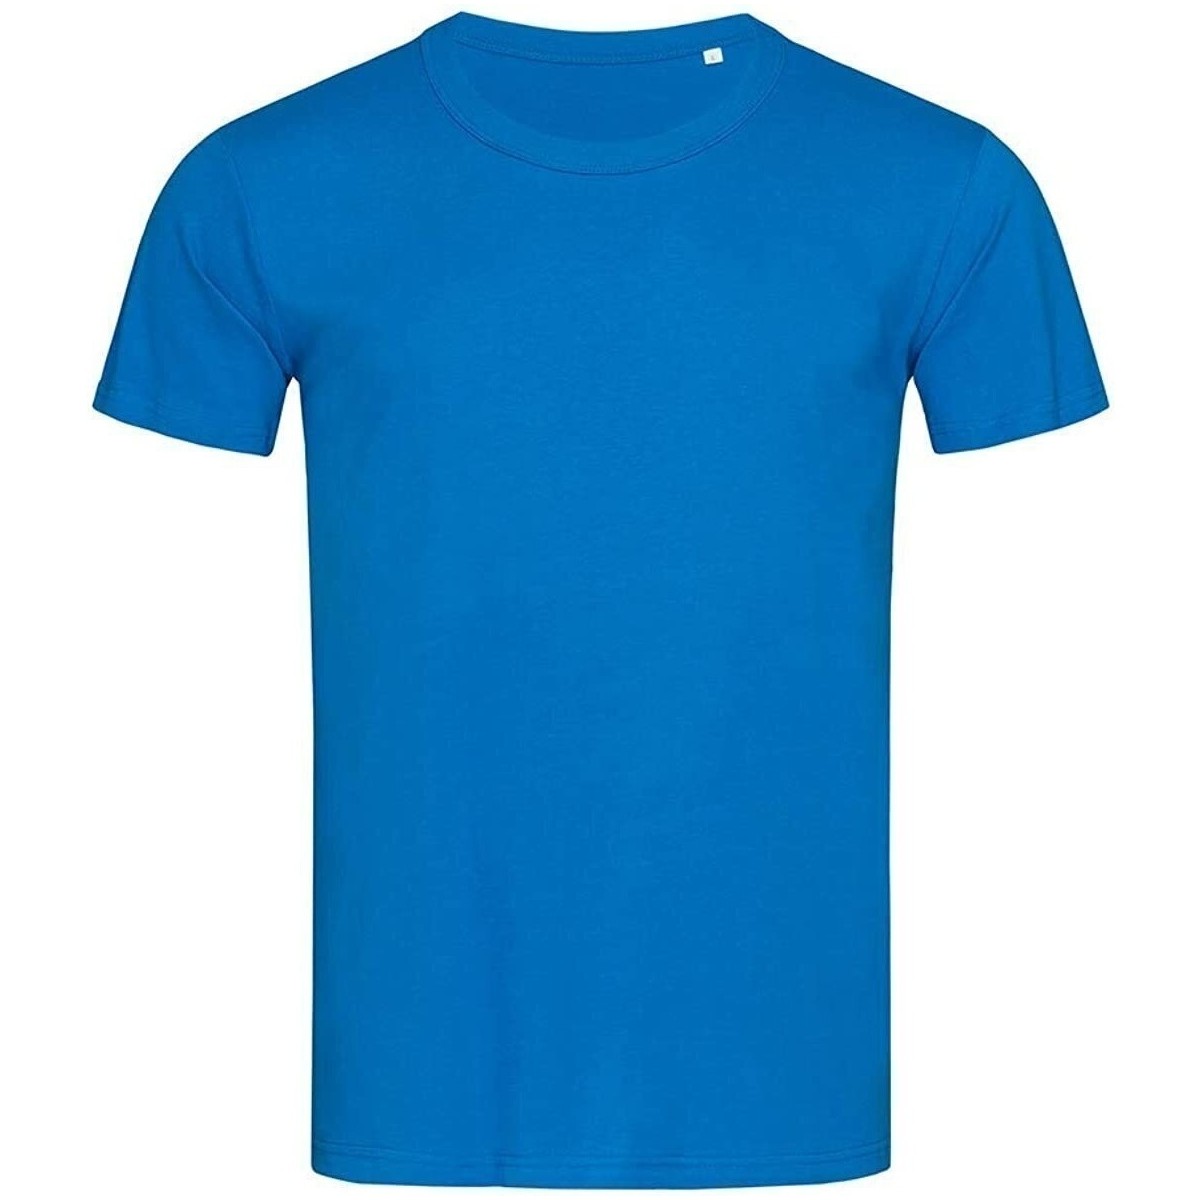 Vêtements Homme T-shirts manches longues Stedman Stars Ben Bleu